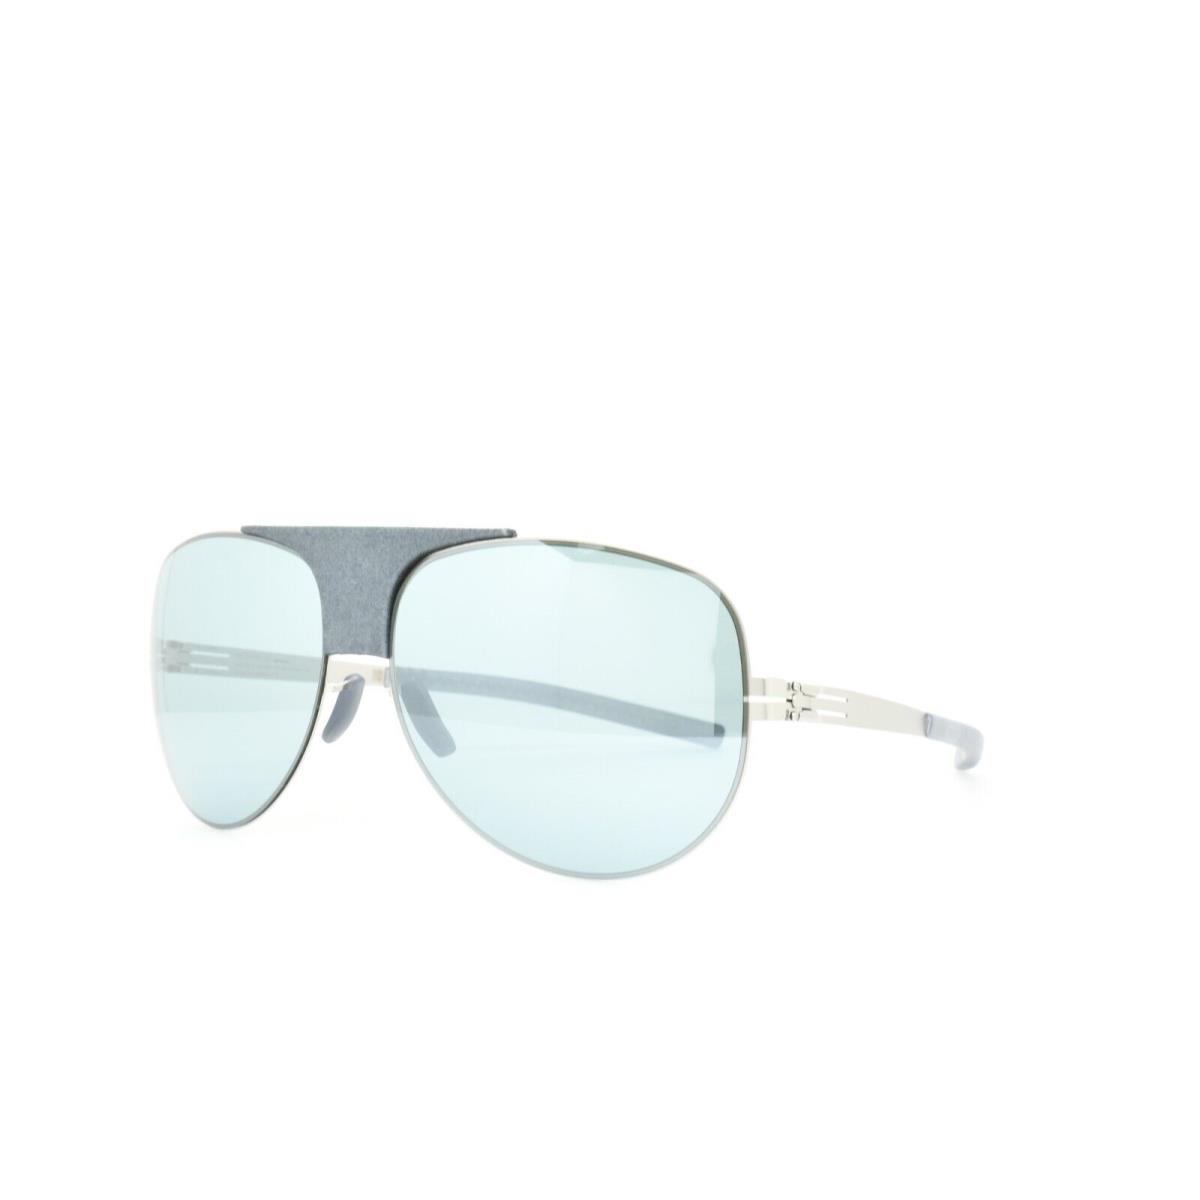 iC Berlin Sunglasses Roadster Pearl 62-16-145